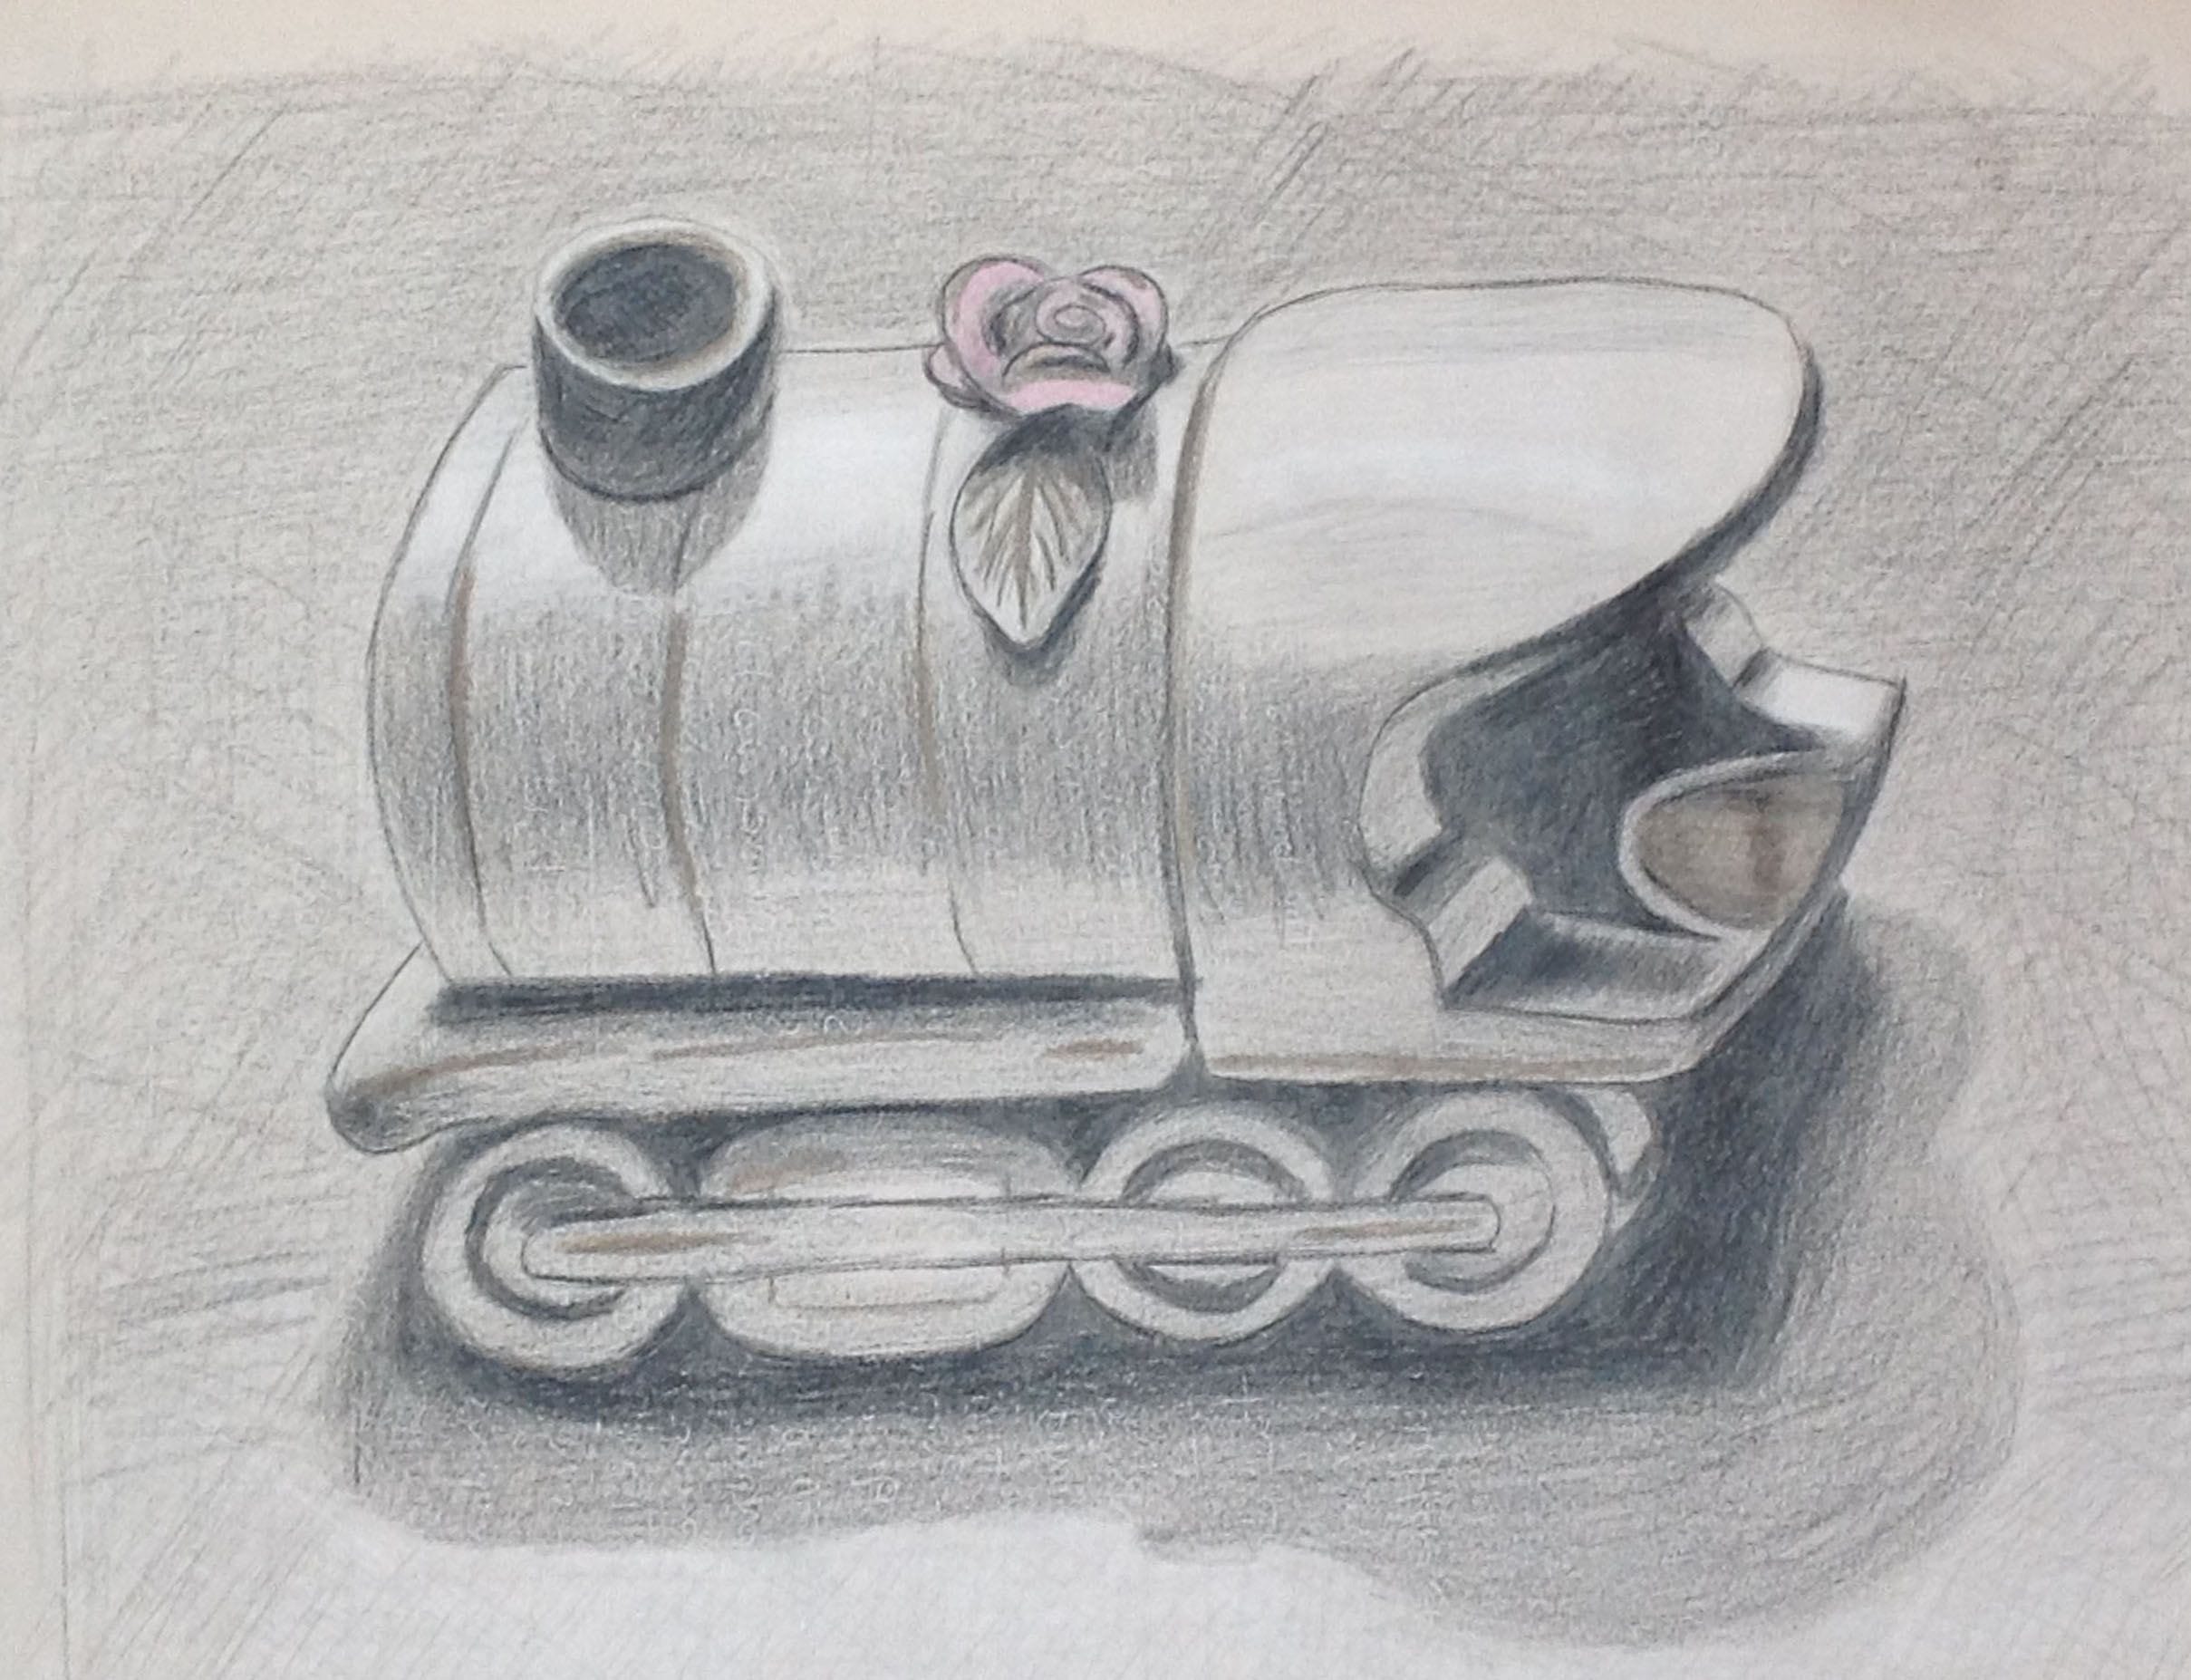 Train Engine Ashtray, 2019
Colored Pencils on Paper
12"W x 8.5"H, Walli White, artist